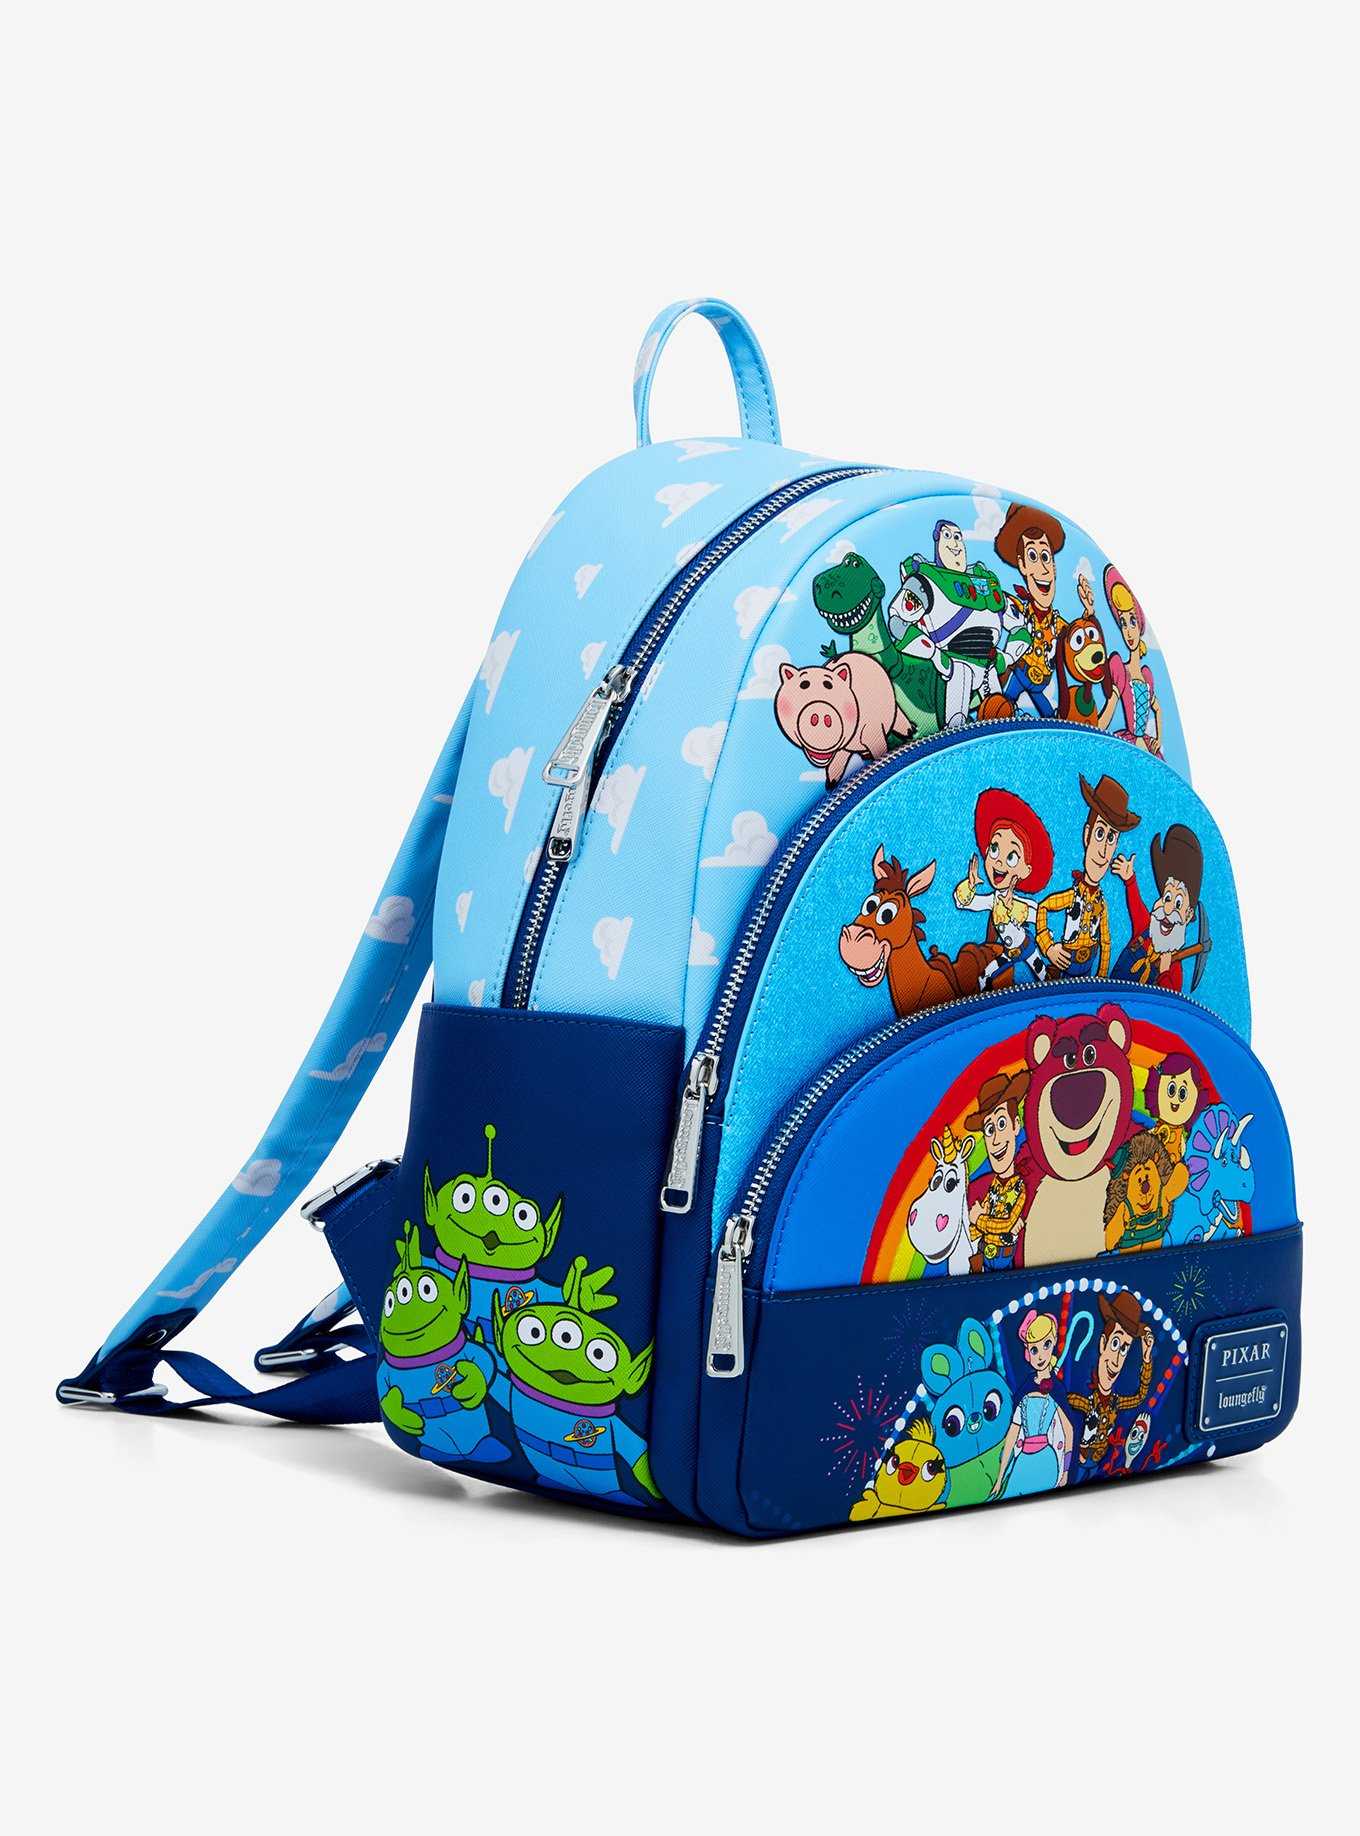 Loungefly Disney Pixar Toy Story Four Pocket Mini Backpack, , hi-res